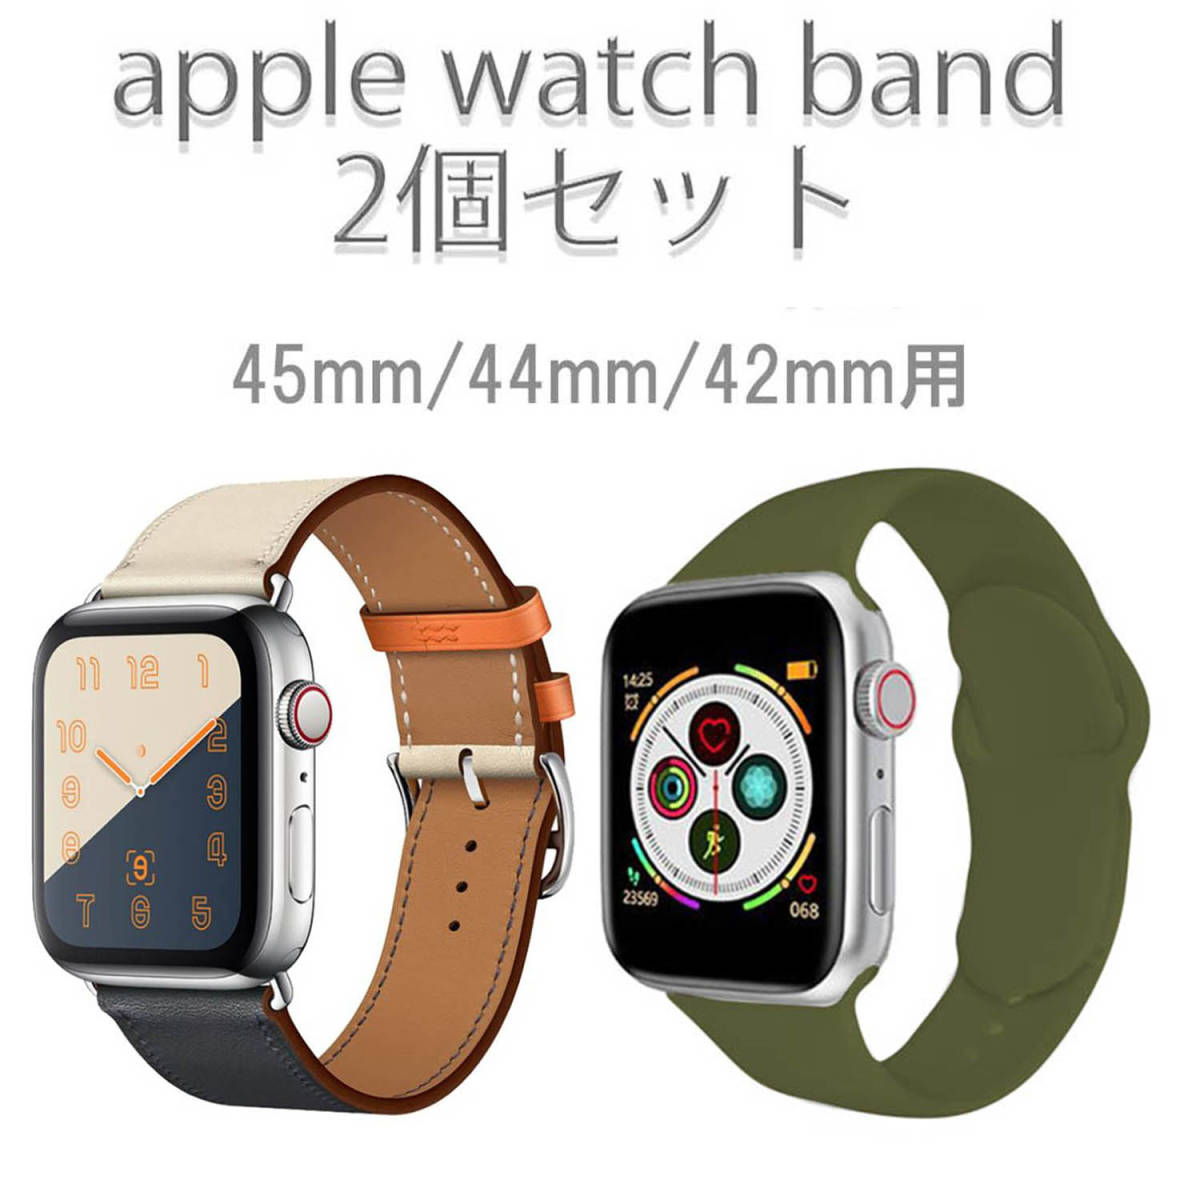 Yahoo!オークション -「apple watch series 1 42mm」の落札相場・落札価格